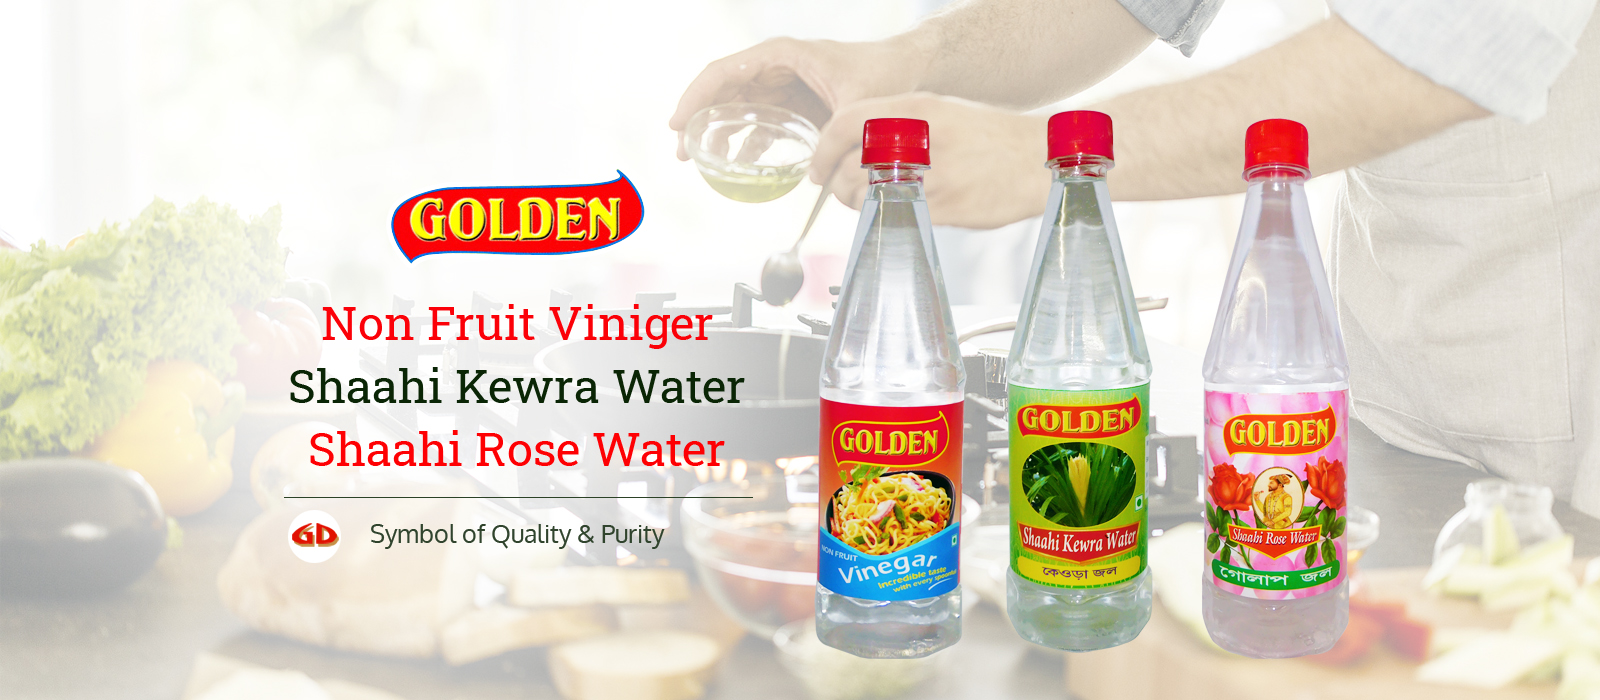 Golden Vineger Golden Kewra Water Golder Rose Water